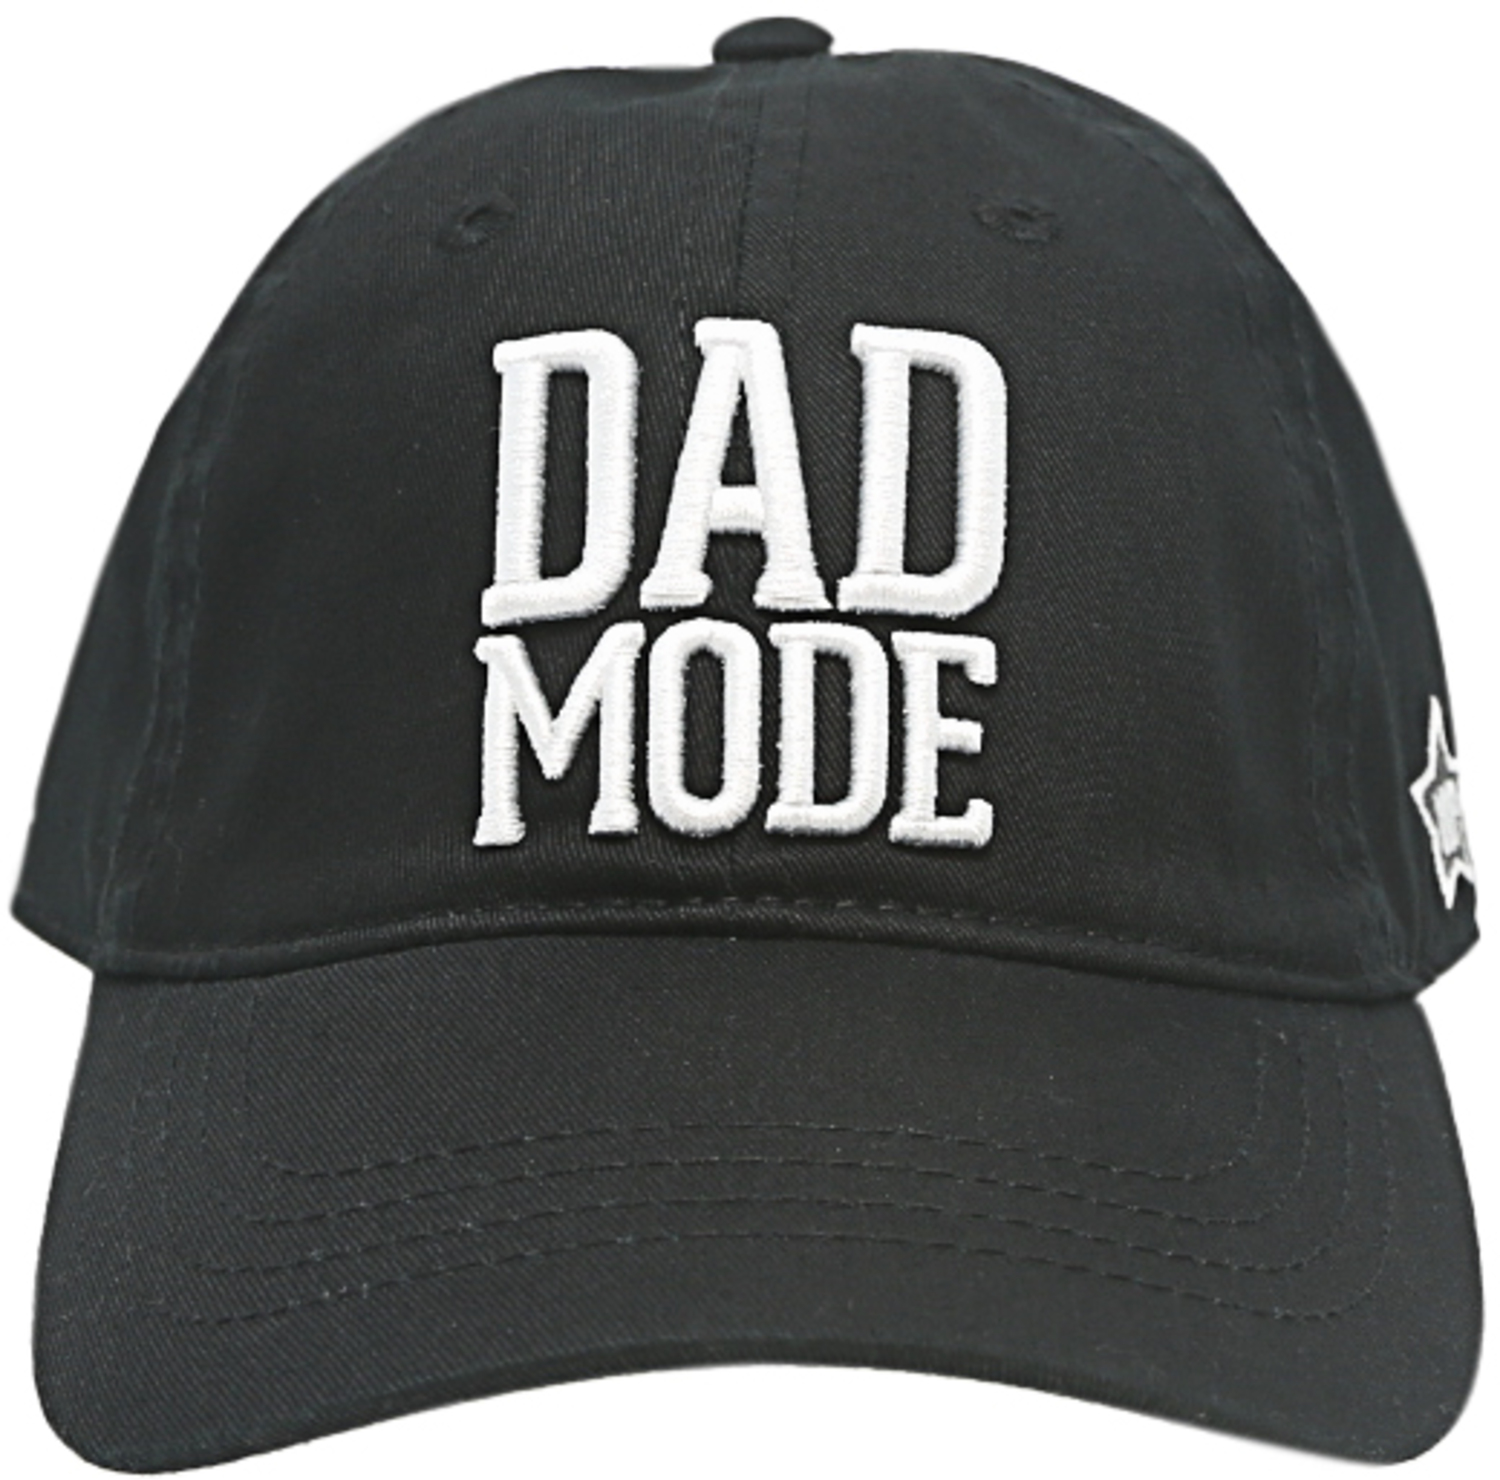 Dad Mode by We People - Dad Mode - Black Adjustable Hat